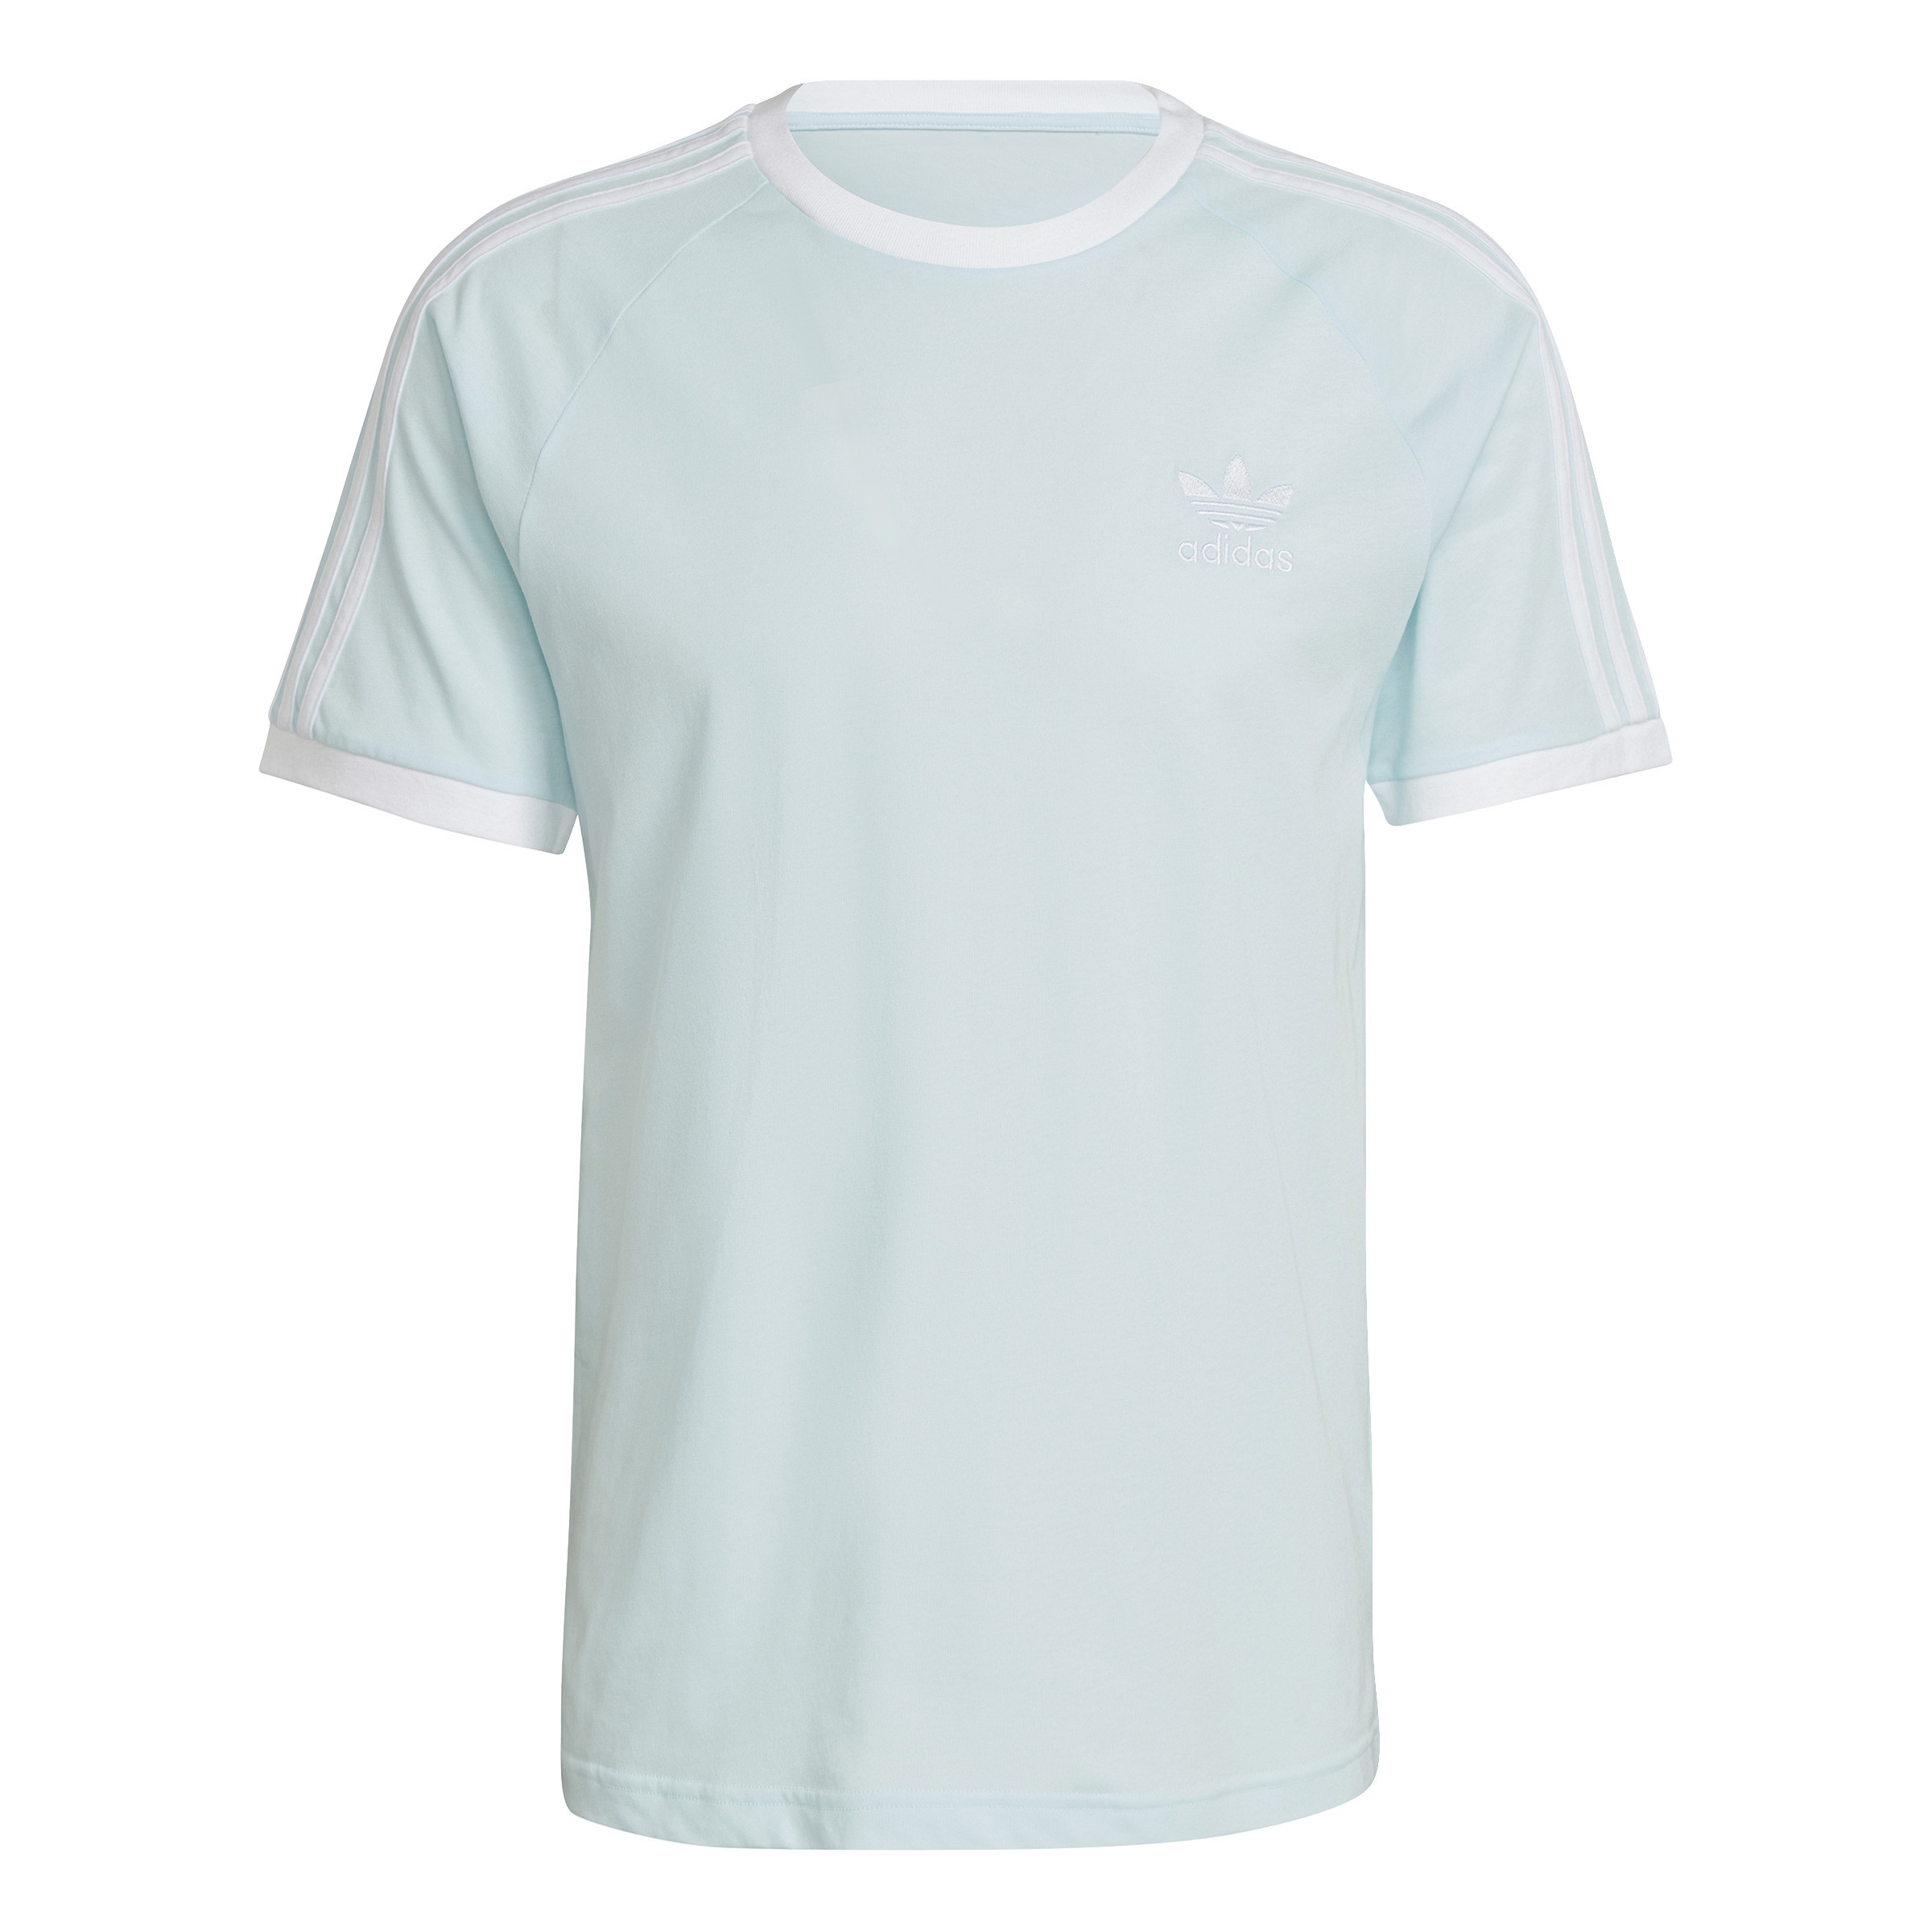 Adidas - T-shirt adicolor, Light Blue, large image number 0